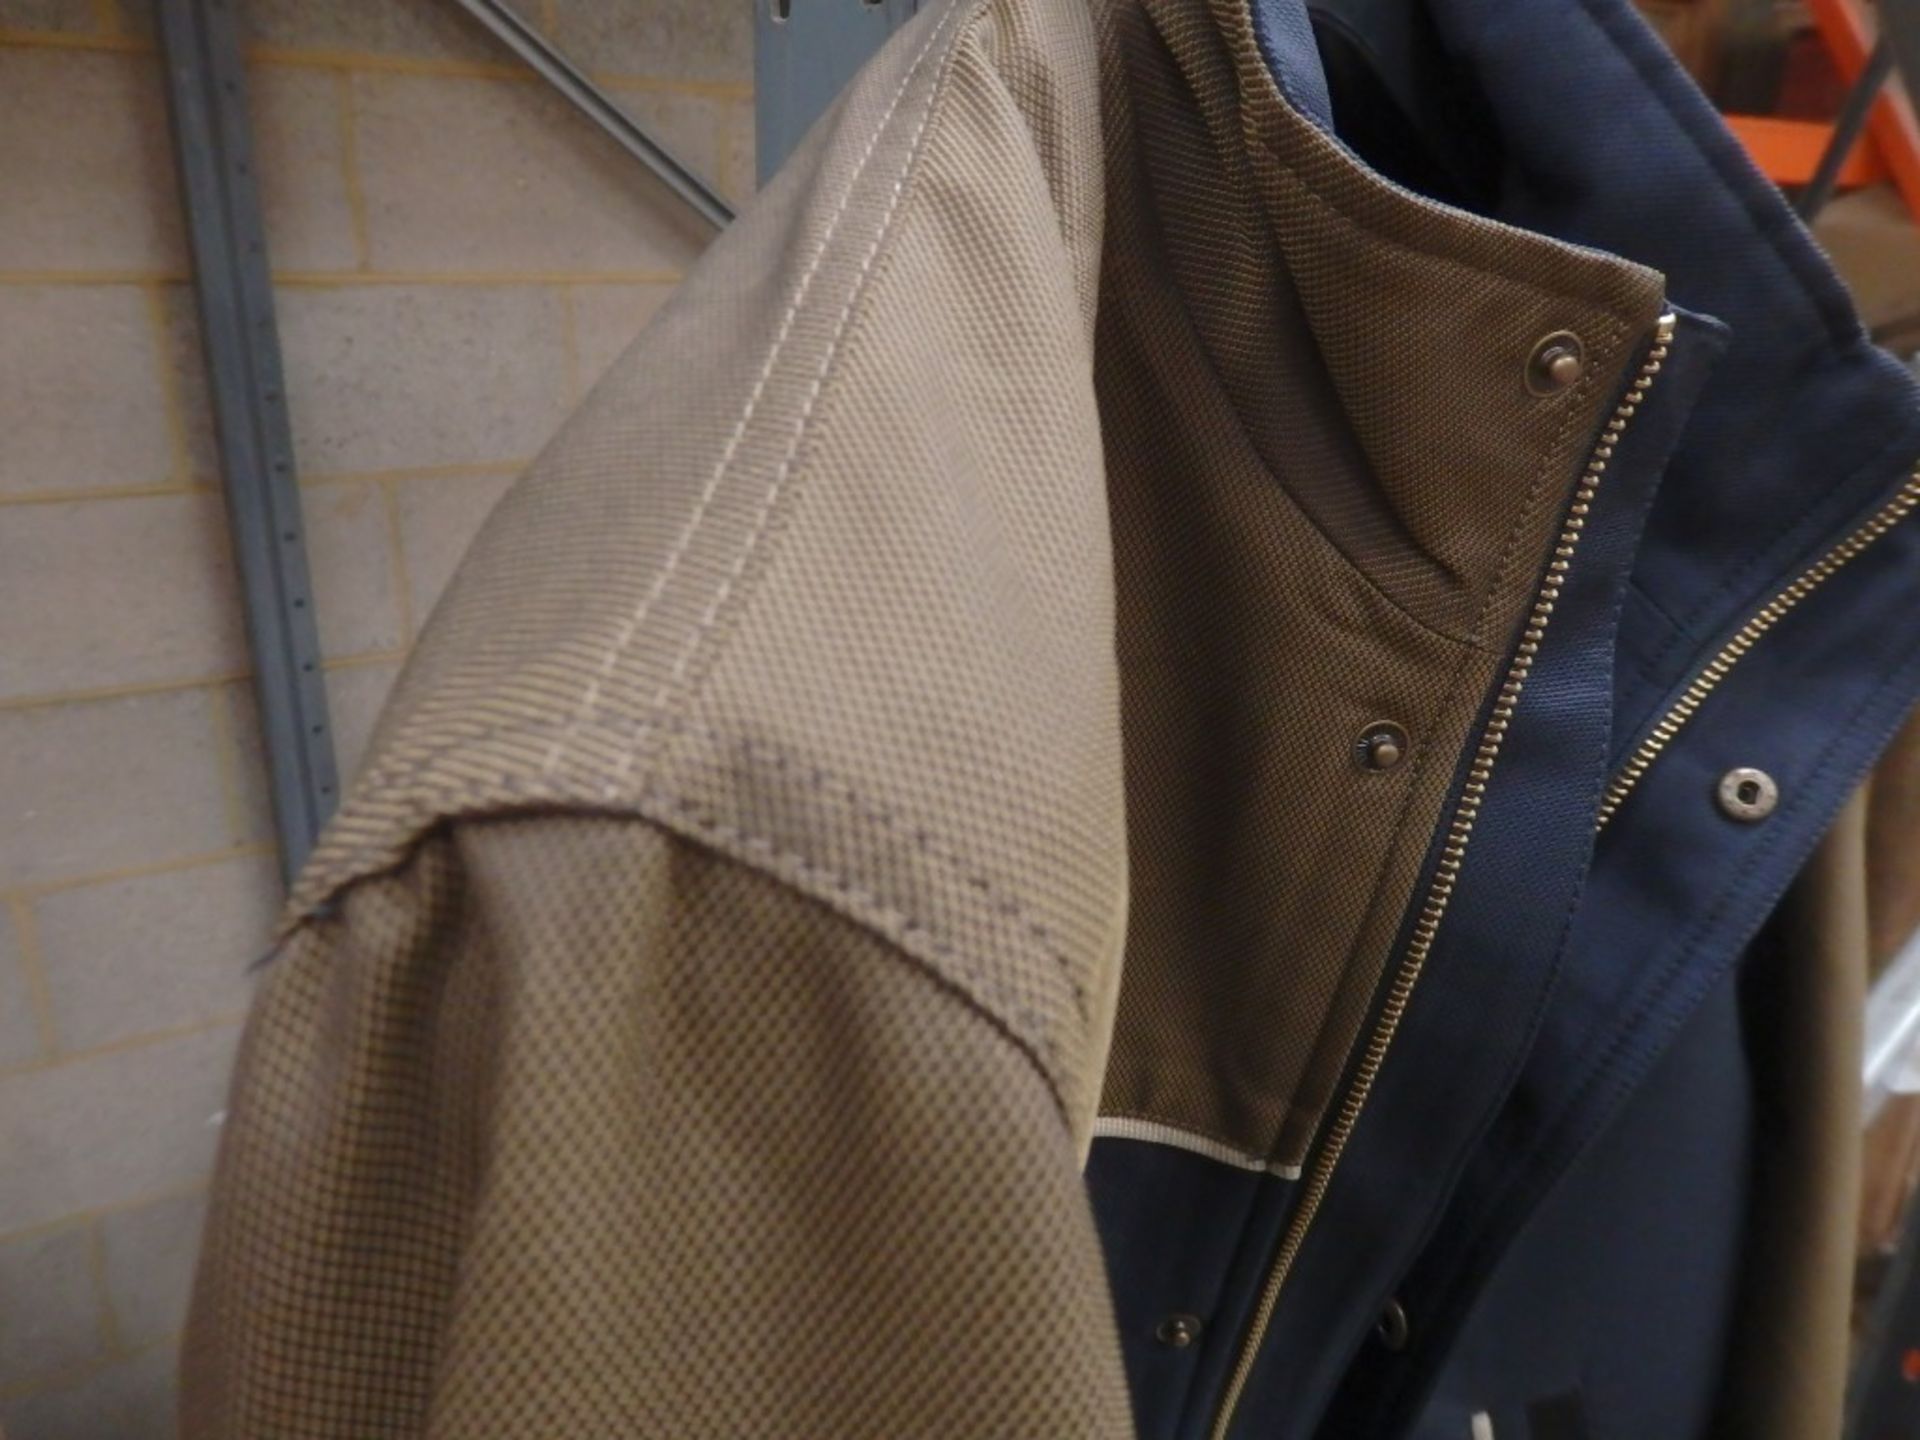 1 x Mens 'Ocean Luxury Life' - Jacket with detachable hood and Internal Zip pockets - Brown/Black - Image 12 of 15